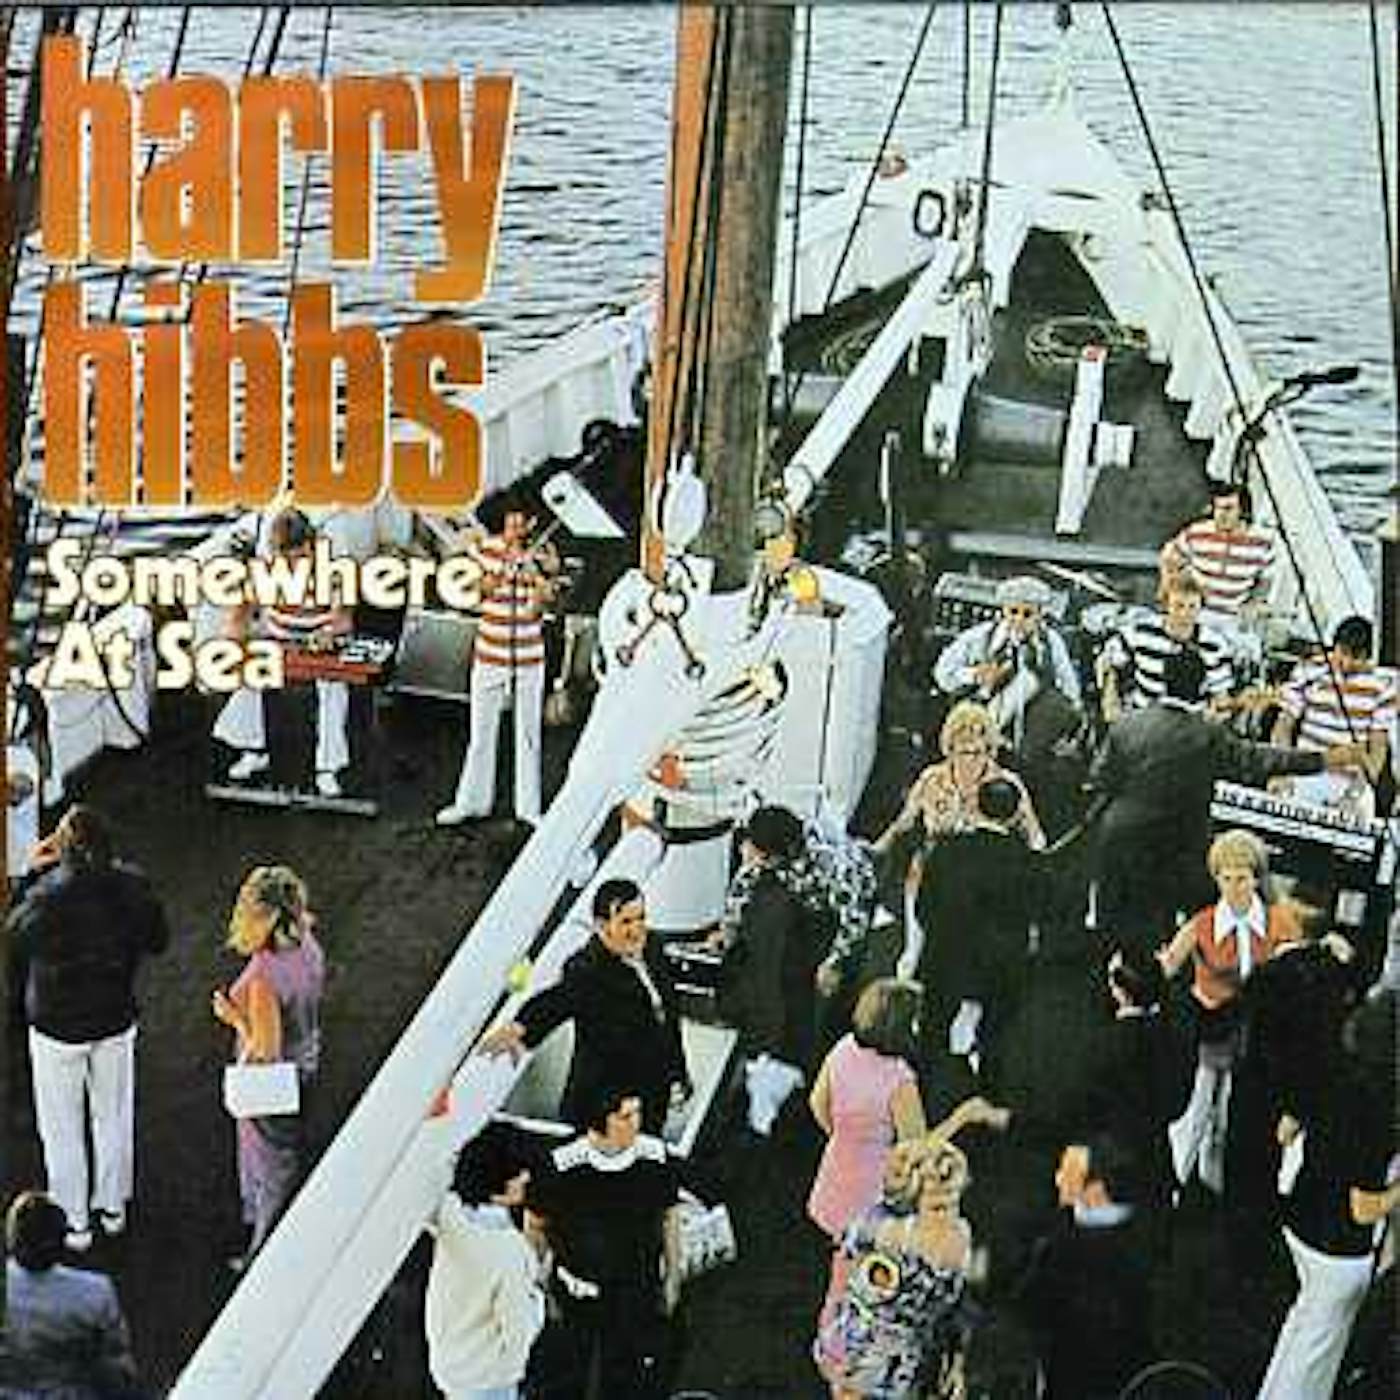 Harry Hibbs SOMEWHERE AT SEA CD